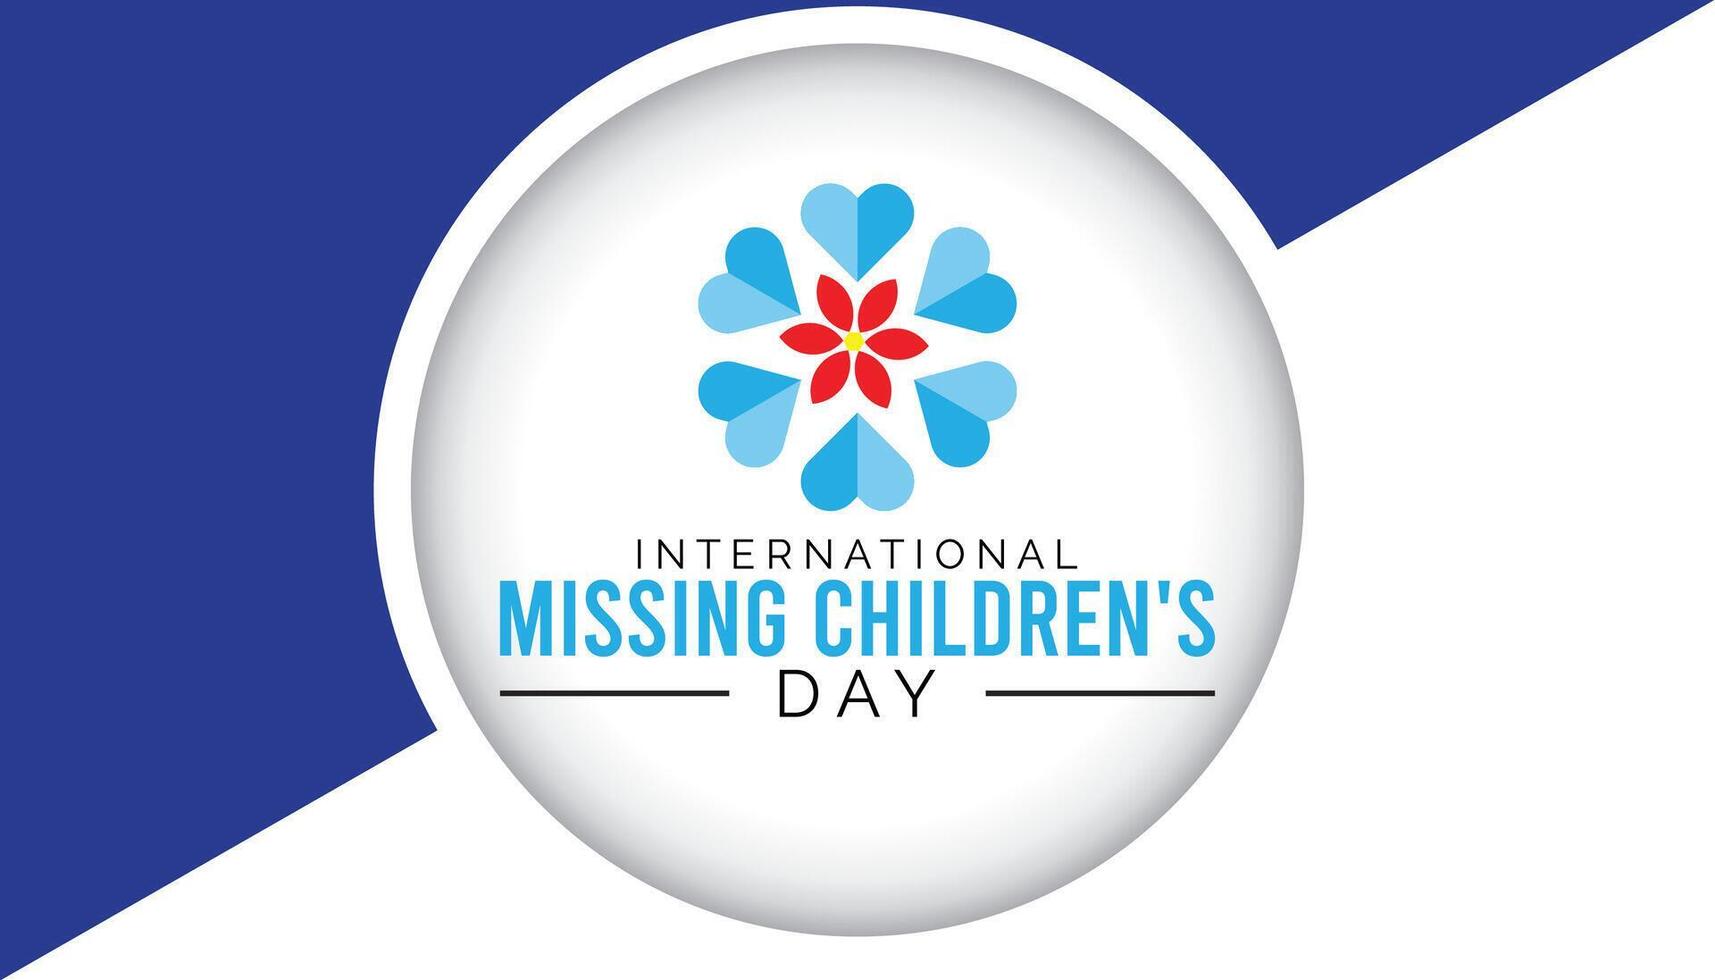 internacional desaparecido para niños día observado cada año en mayo 25 modelo para fondo, bandera, tarjeta, póster con texto inscripción. vector